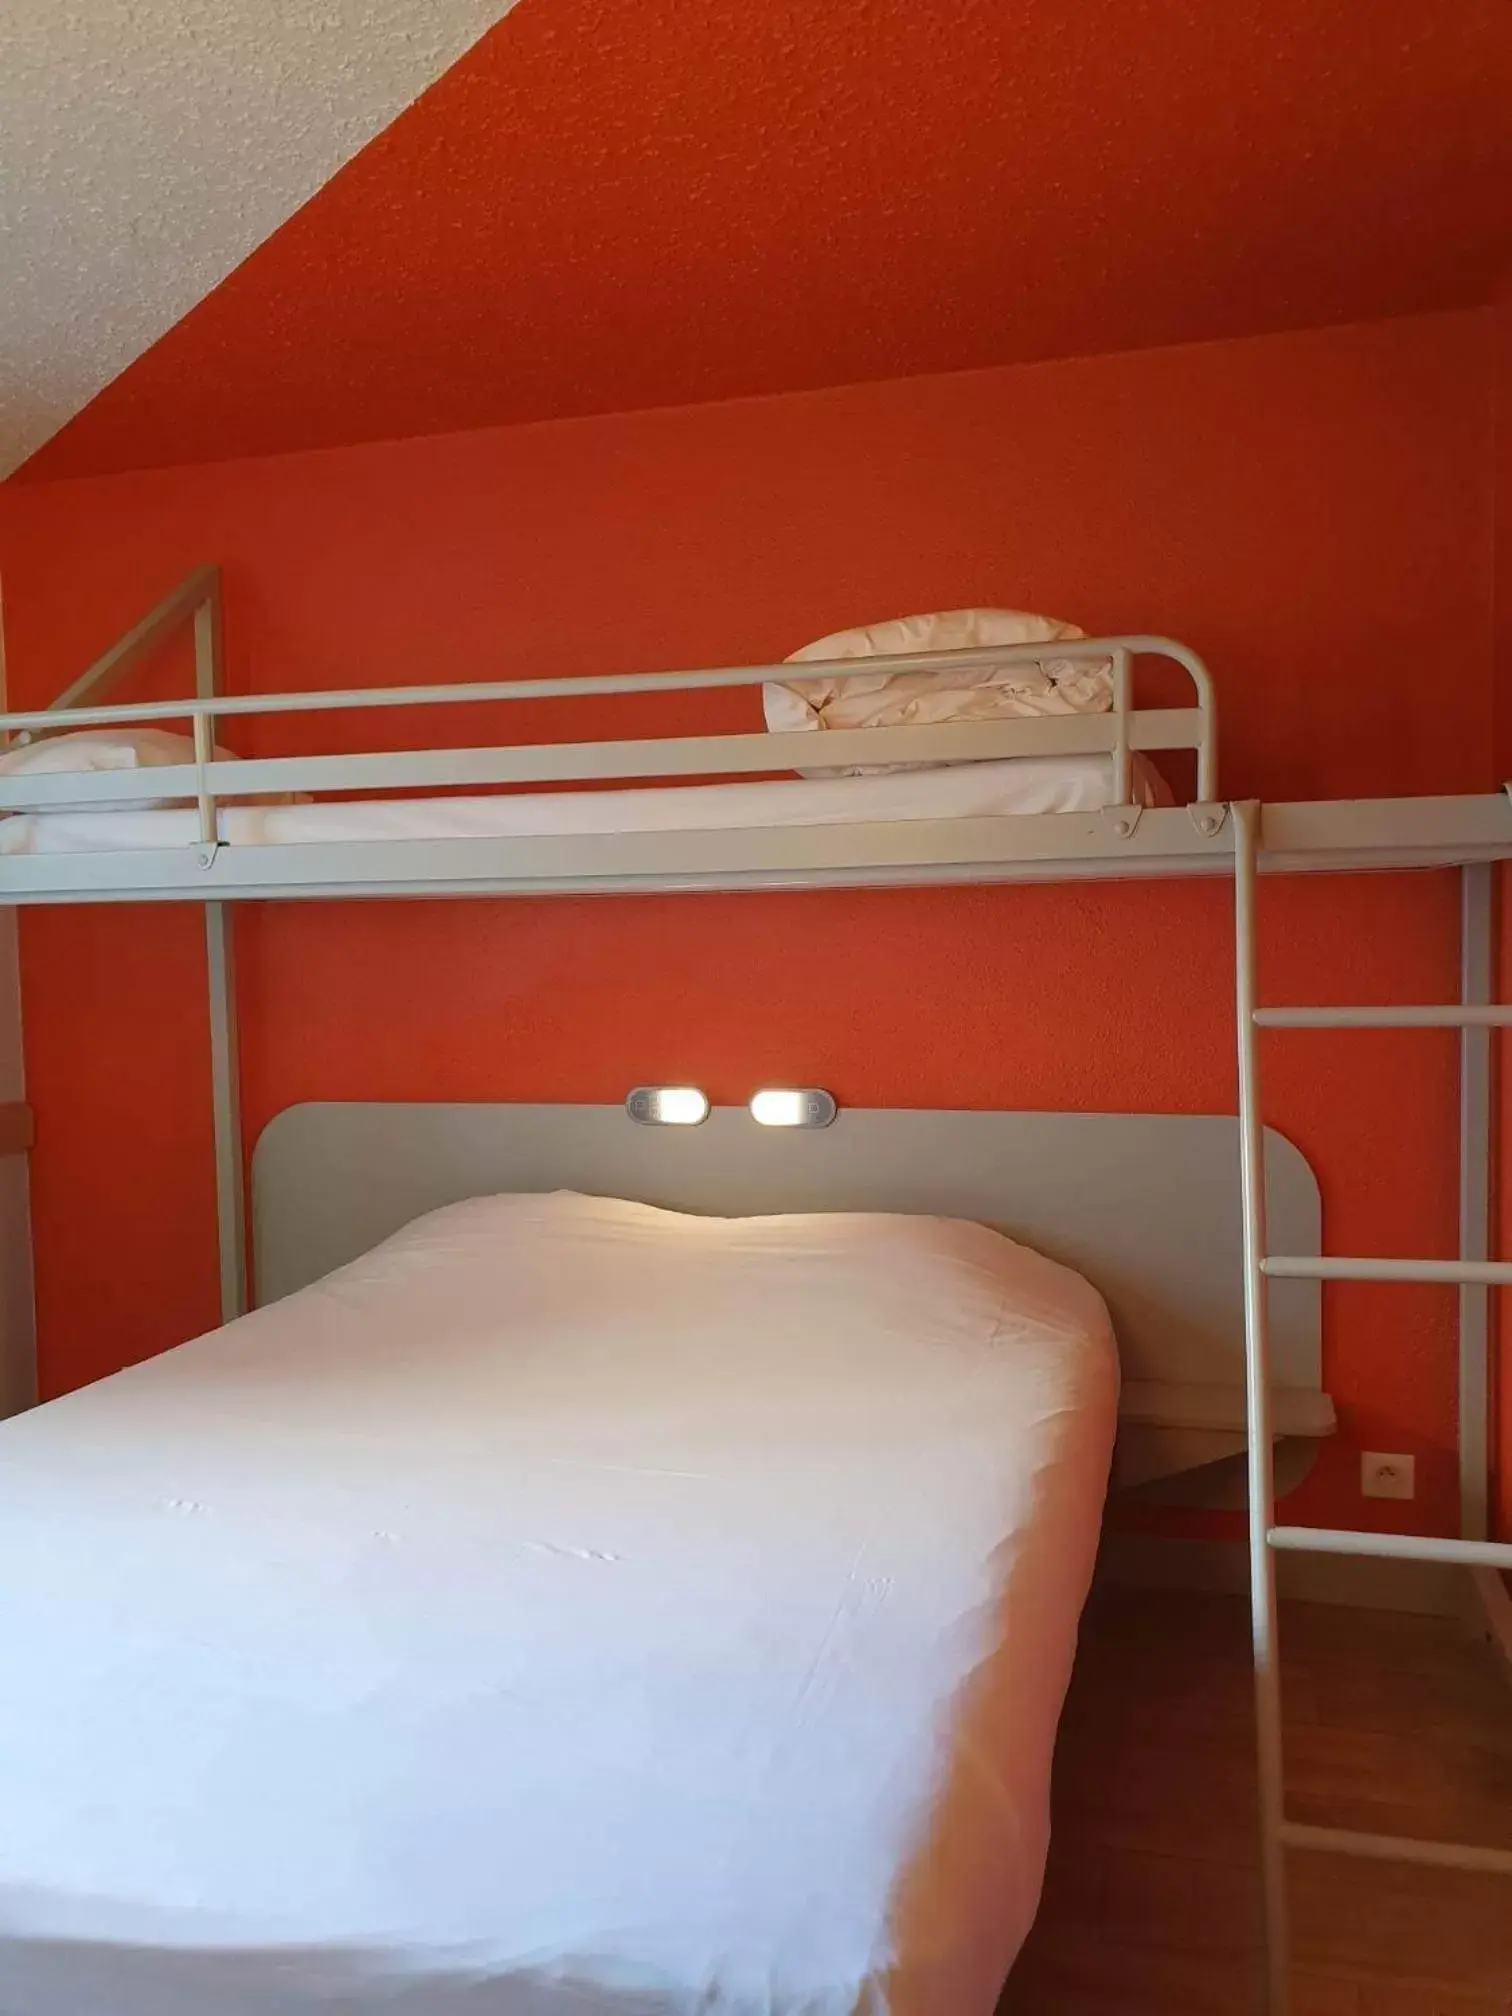 Bed, Bunk Bed in Cit'hotel Design Booking Evry Saint-Germain-lès-Corbeil Sénart